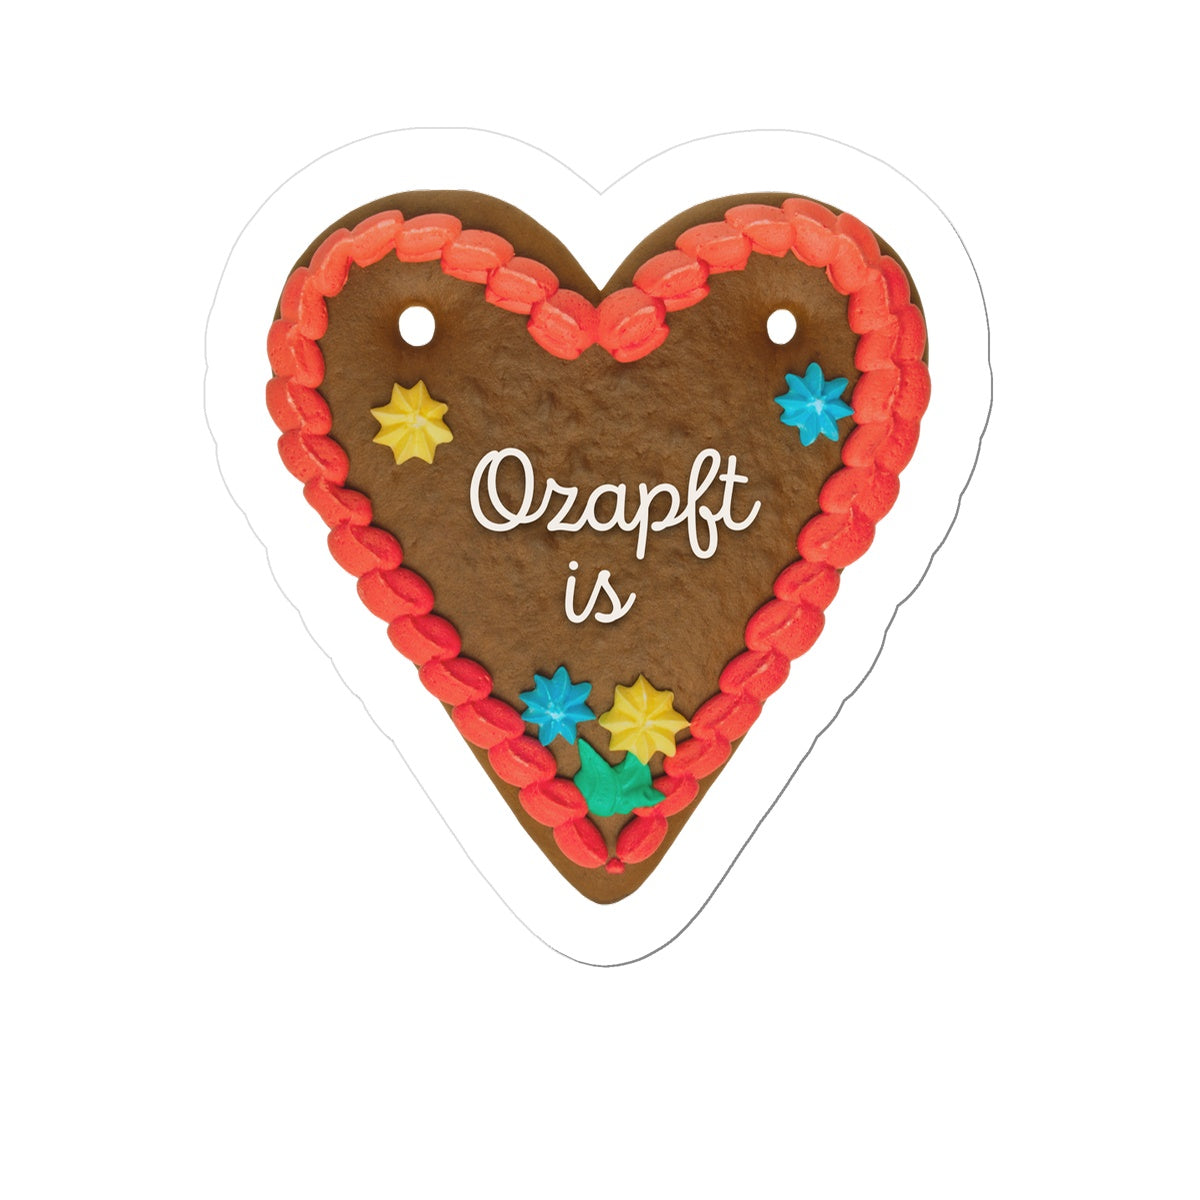 Oktoberfest Retro Sticker "O'zapft is", Gingerbread Heart Print, vinyl, 4 sizes - Bavari Shop - Bavarian Outfits, Dirndl, Lederhosen & Accessories